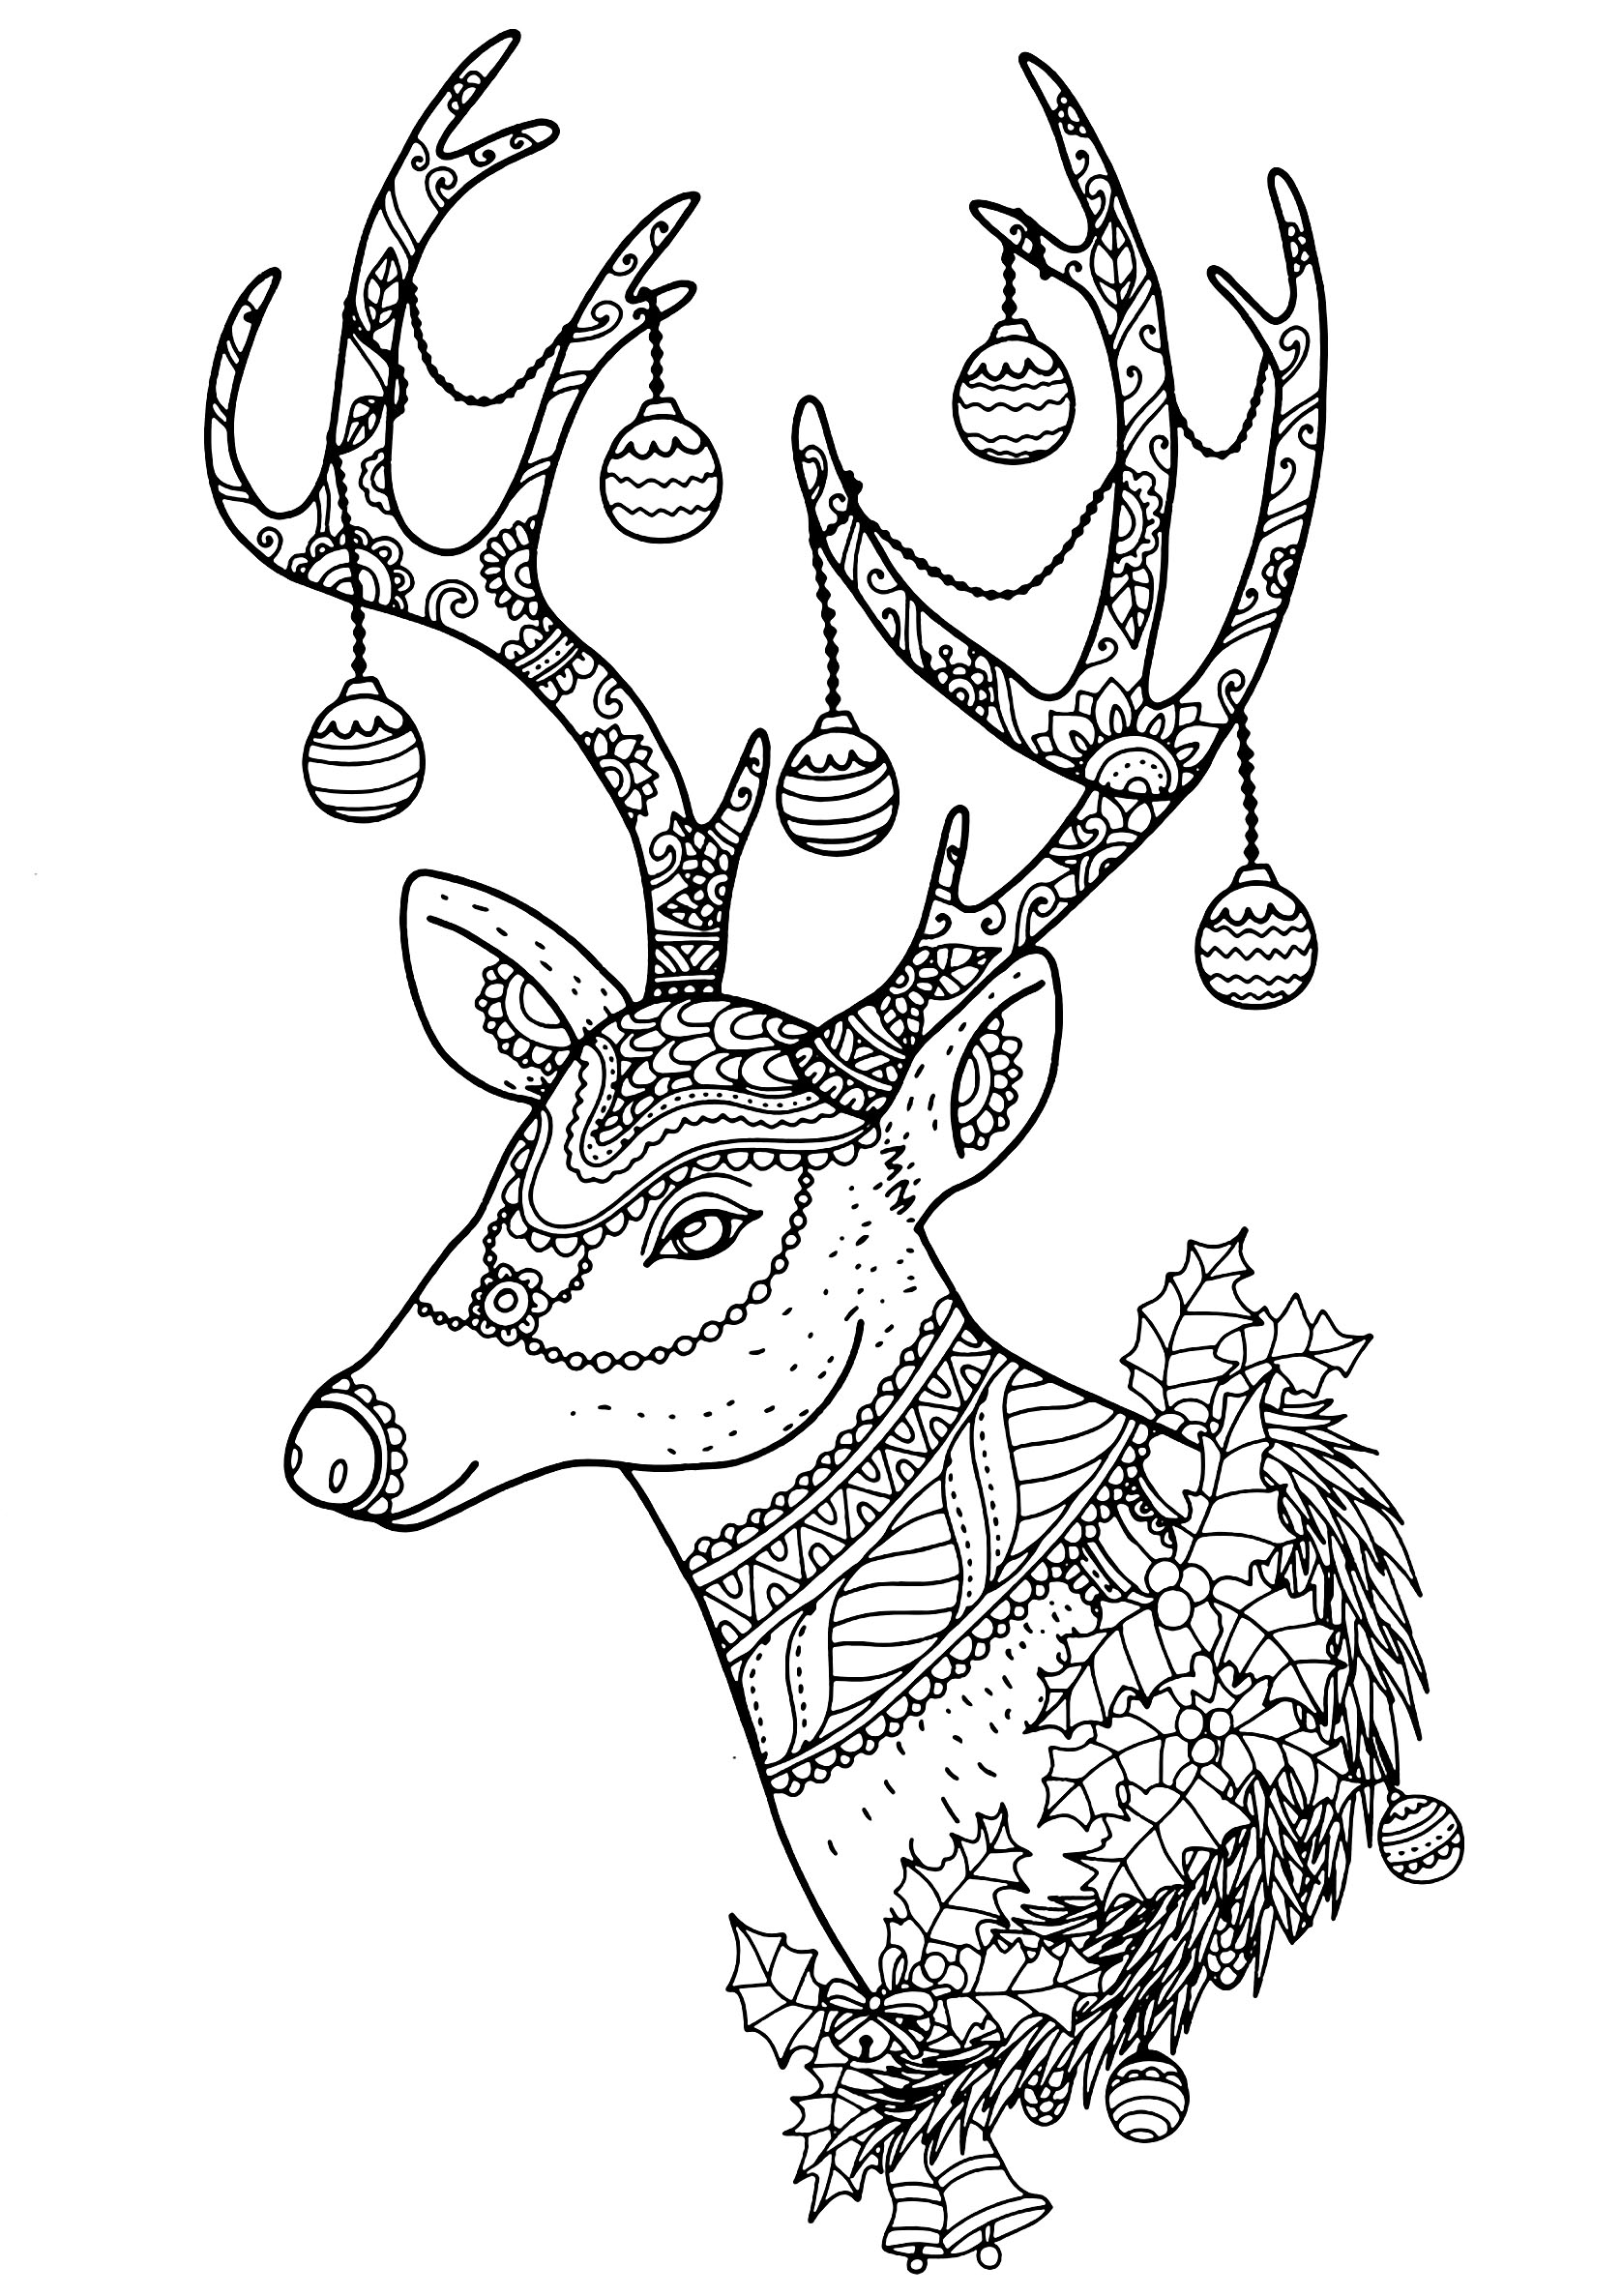 Christmas reindeer nontachai hengtragool - Christmas Adult Coloring Pages